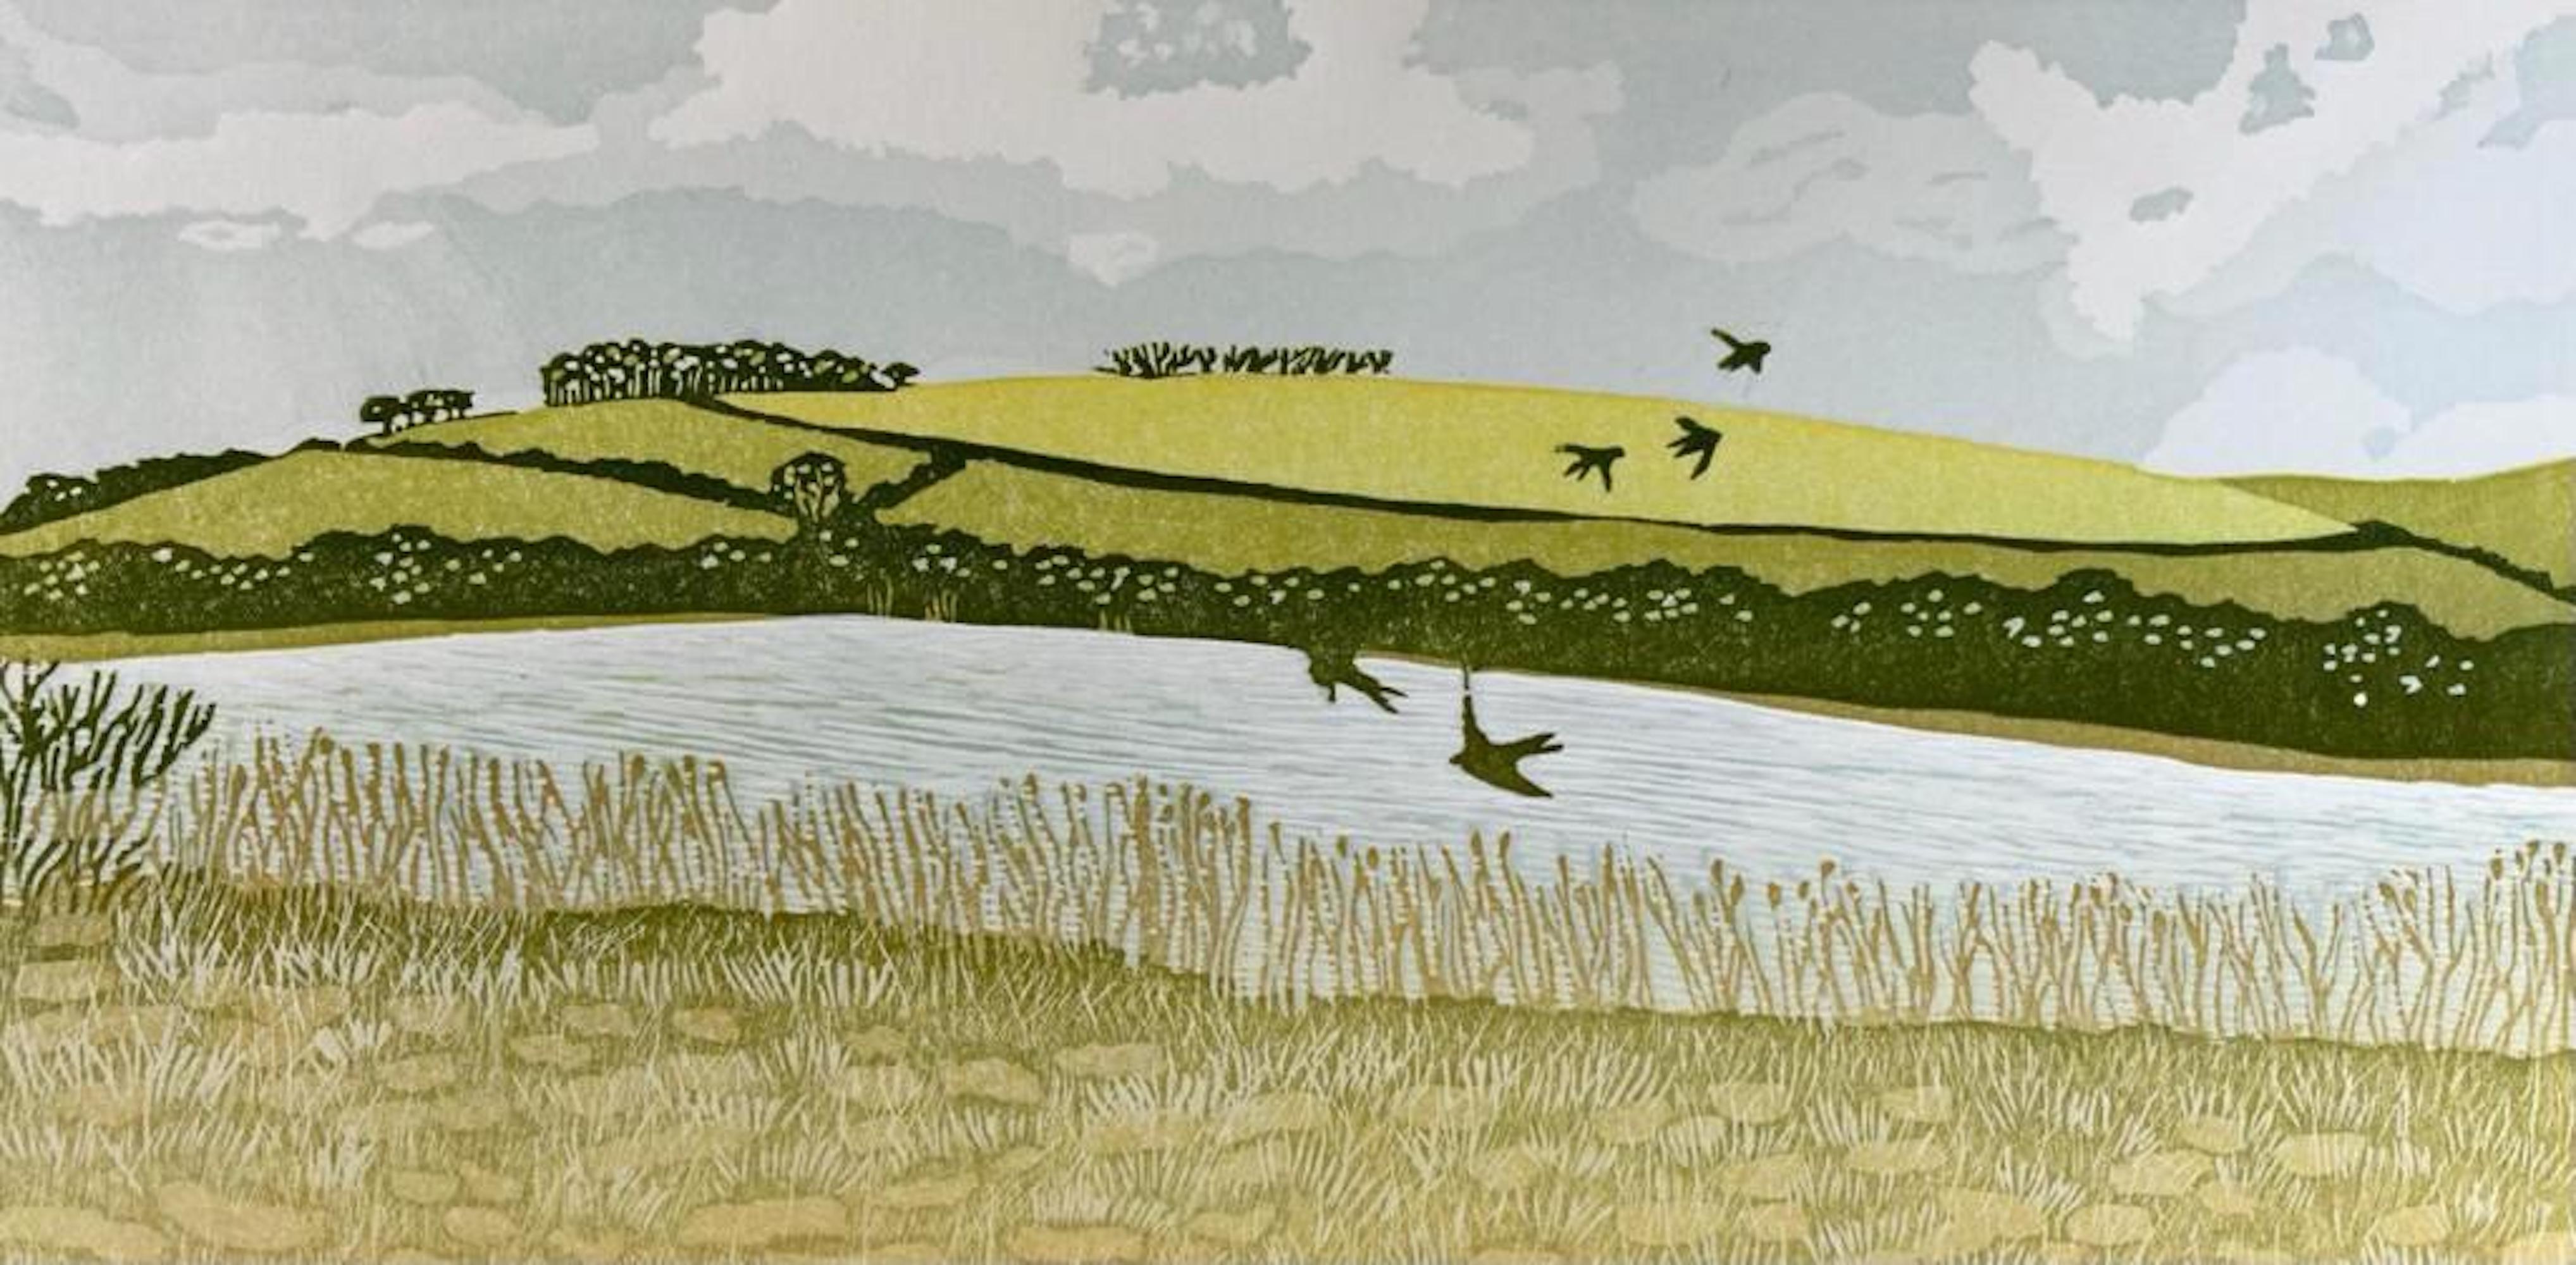 Ann Burnham, Swallows over the Ley, Seascape Art, Handmade Contemporary Print